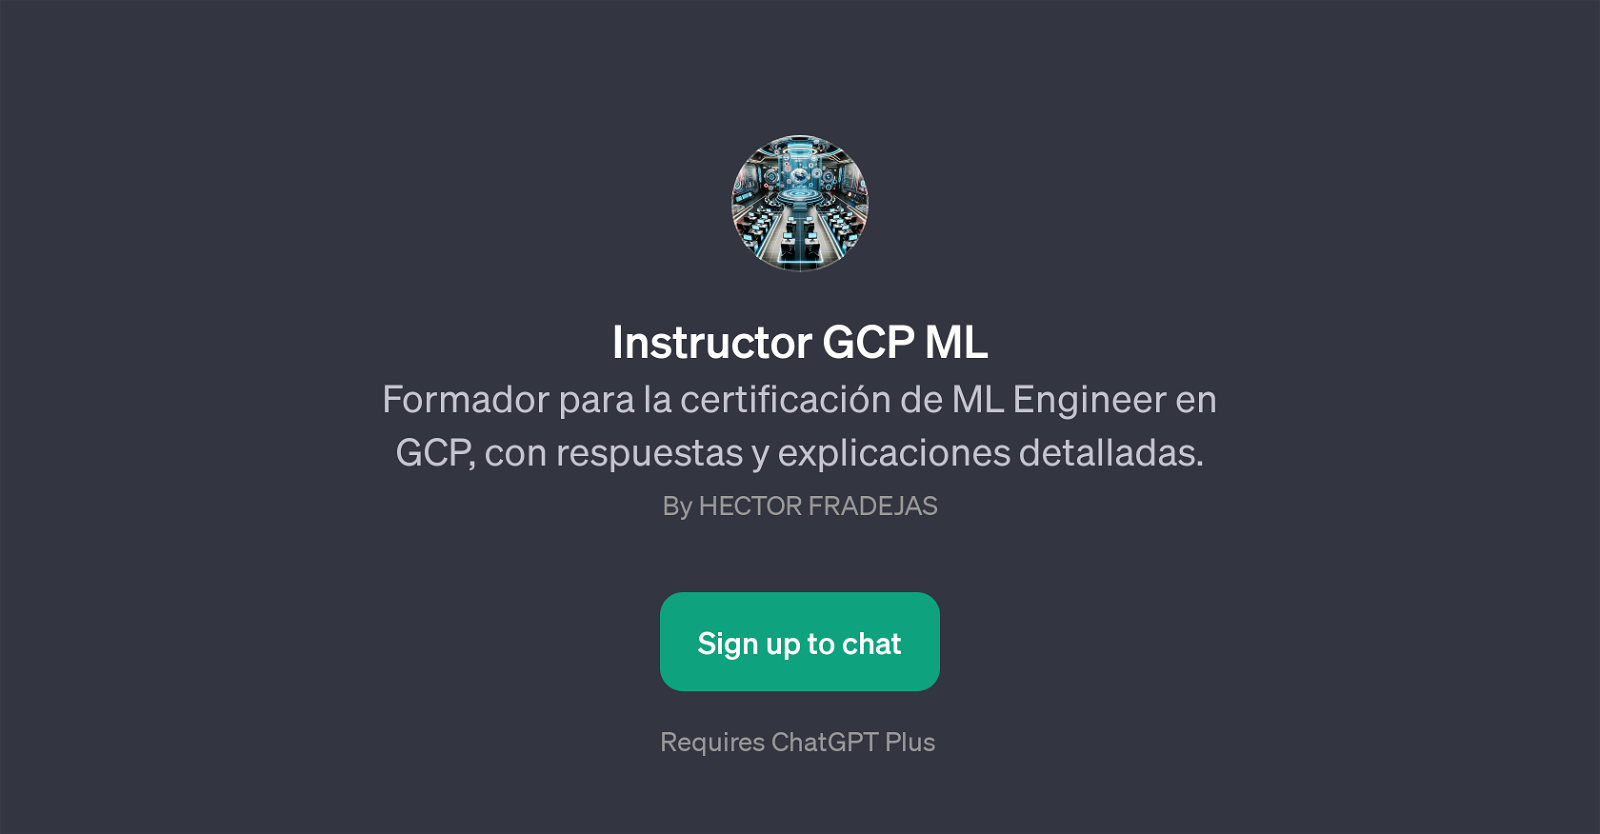 Instructor GCP ML website